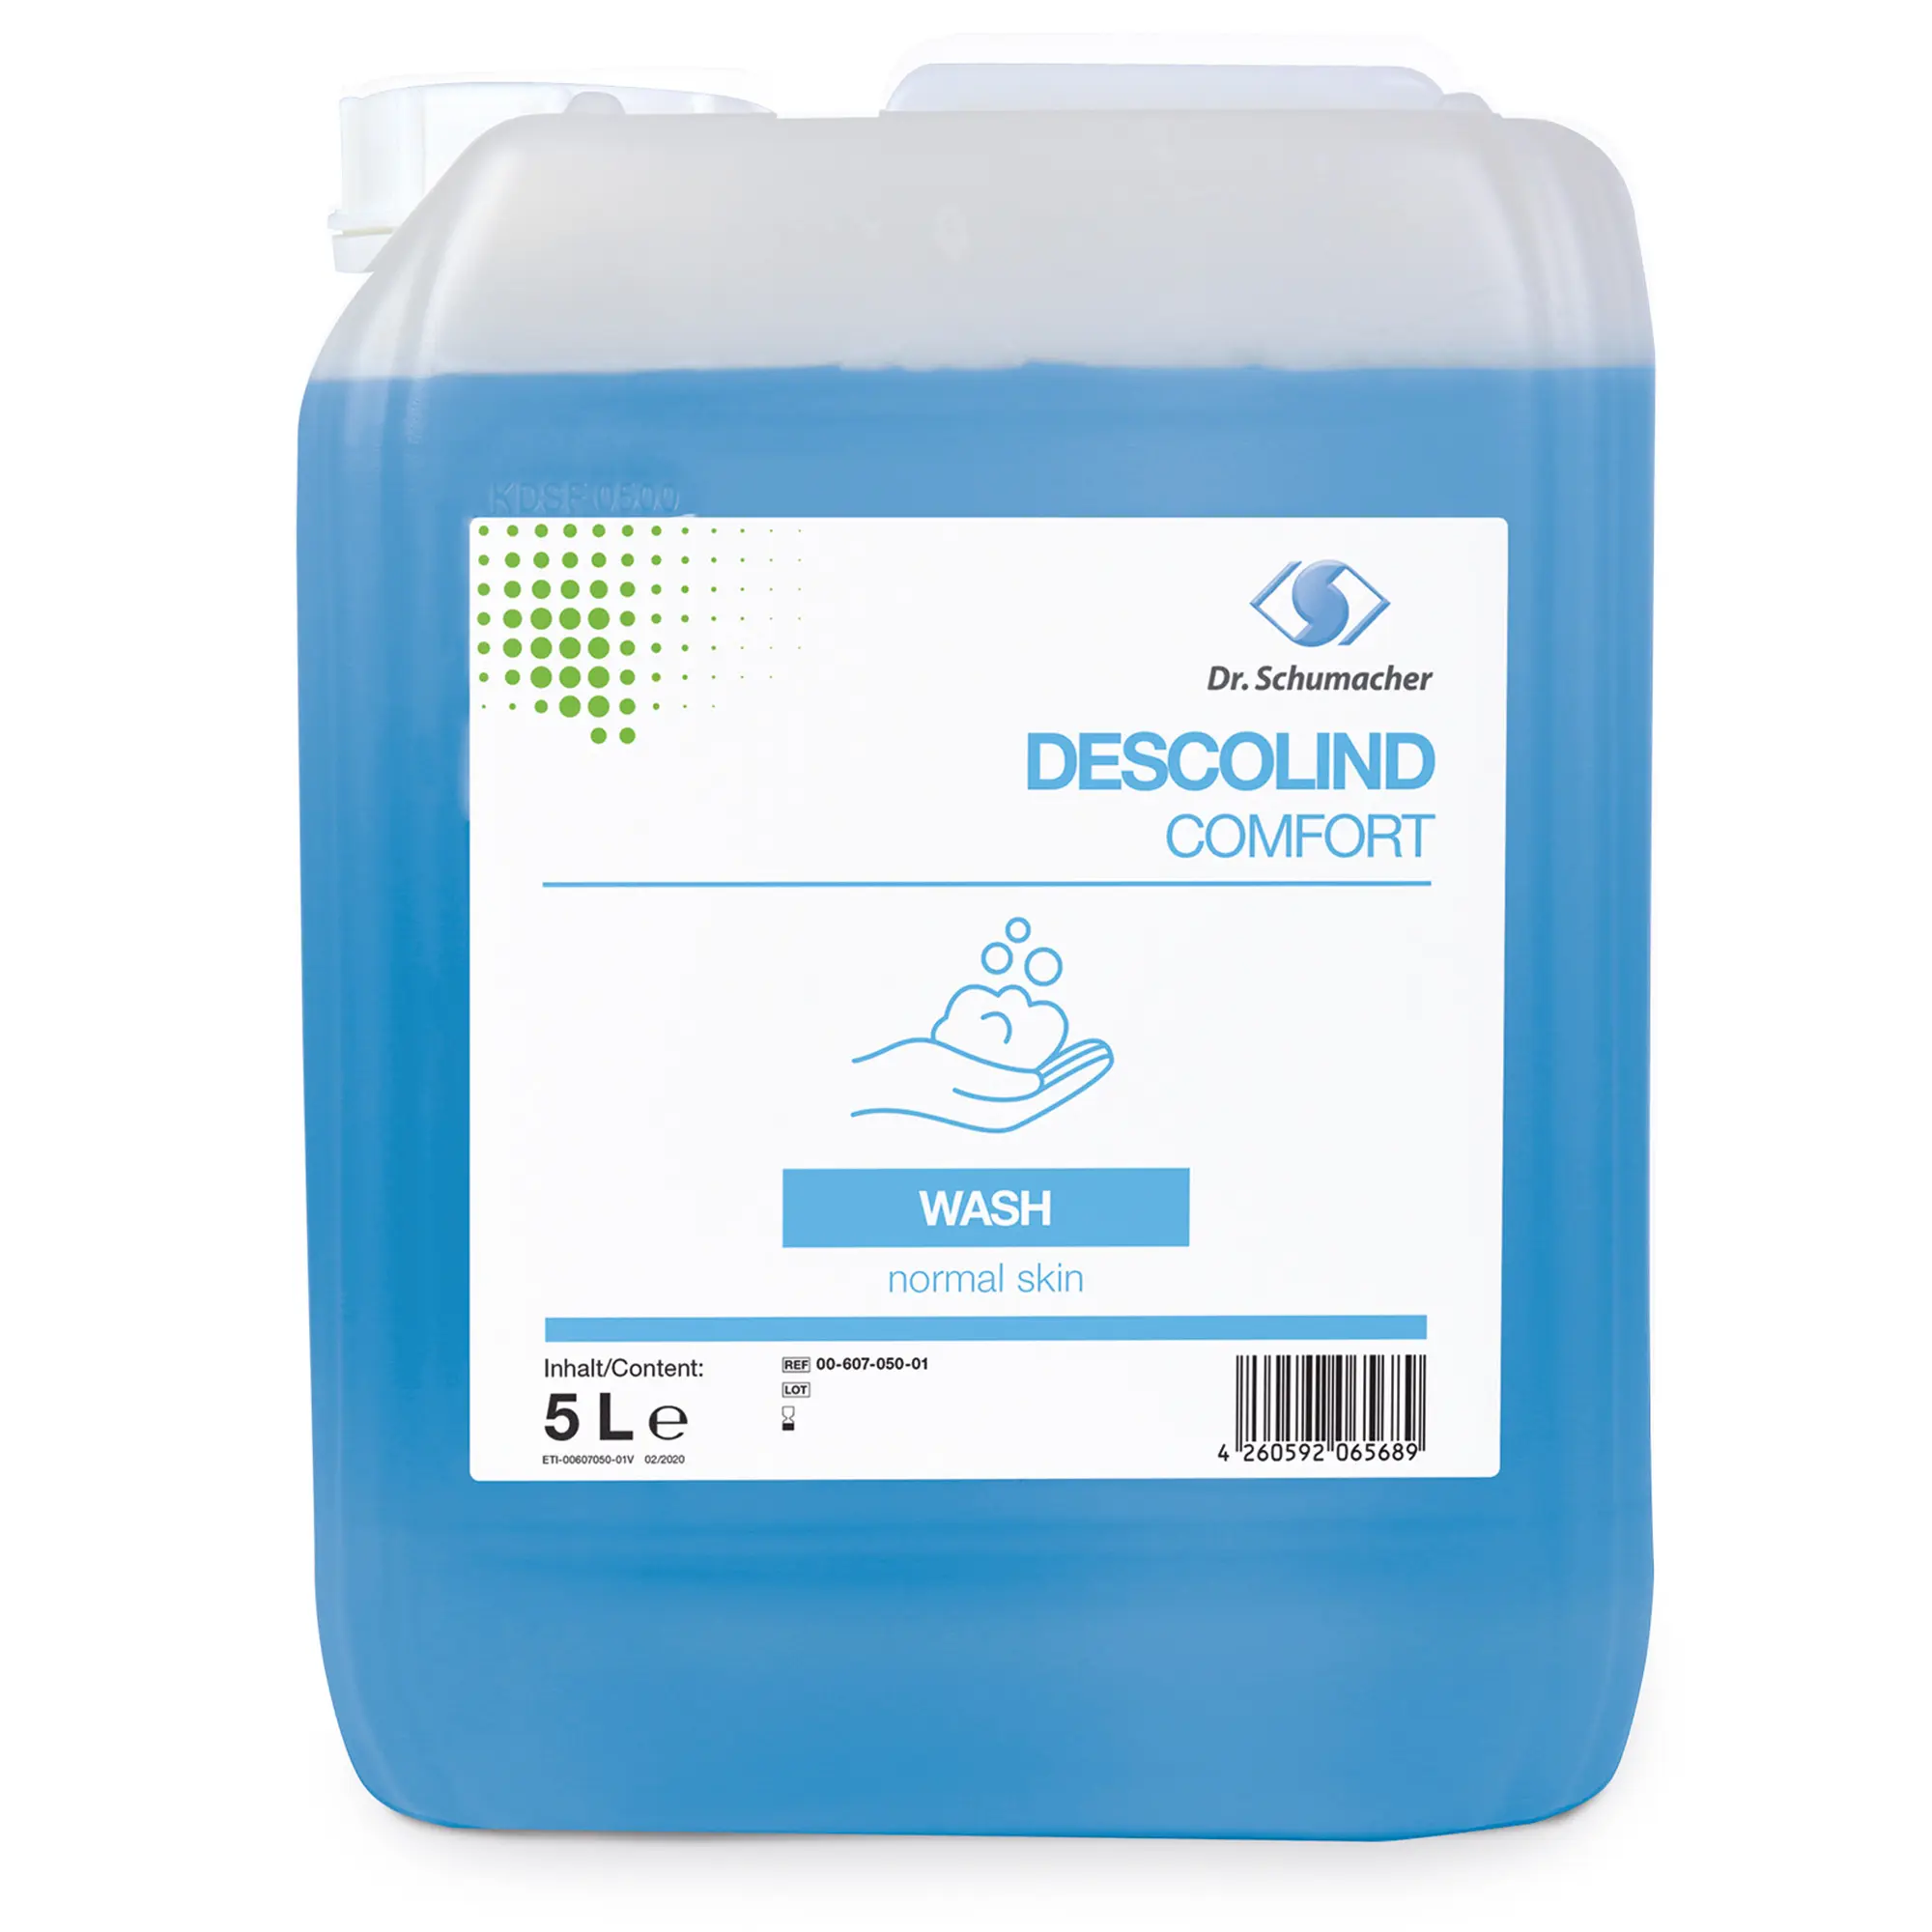 Dr. Schumacher Descolind Comfort Wash Waschlotion 5 Liter Kanister 00-607-050-01_1